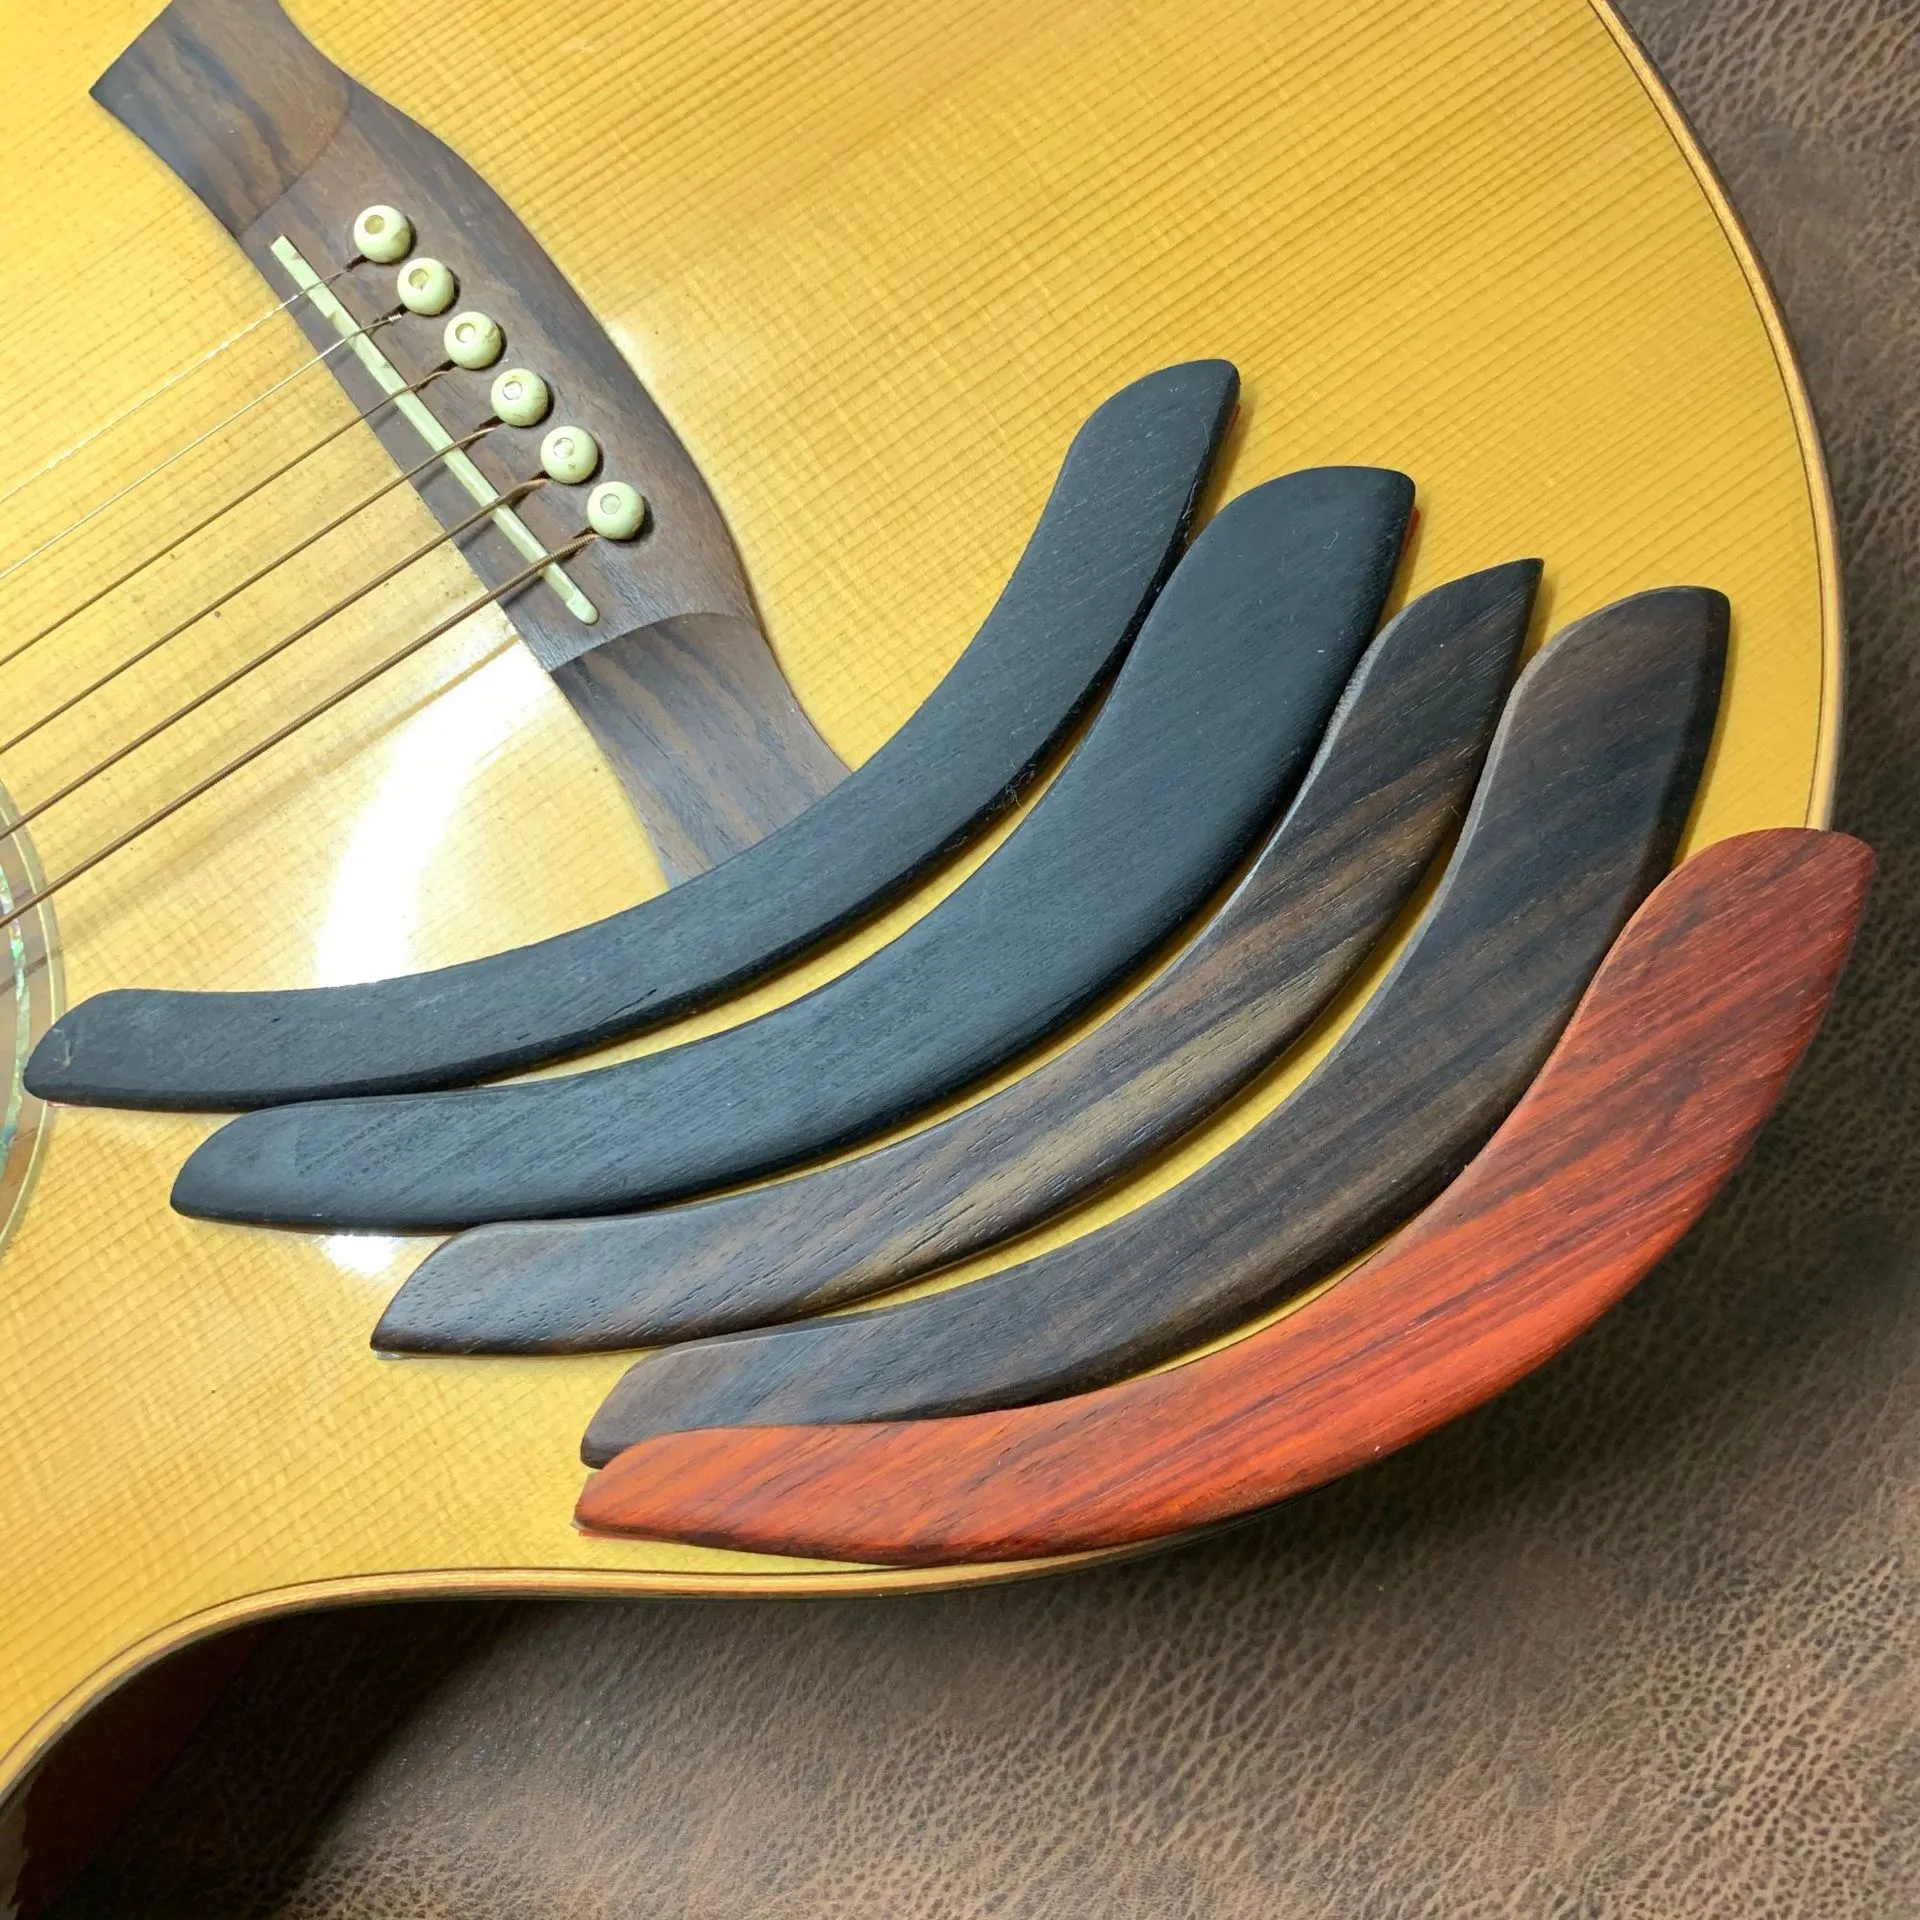 Redwood/Rosewood/Ebony Prigen Solid Guitar Arm Rest Guitar Parts Accessories Accessories для акустической гитары 39-41 дюйма